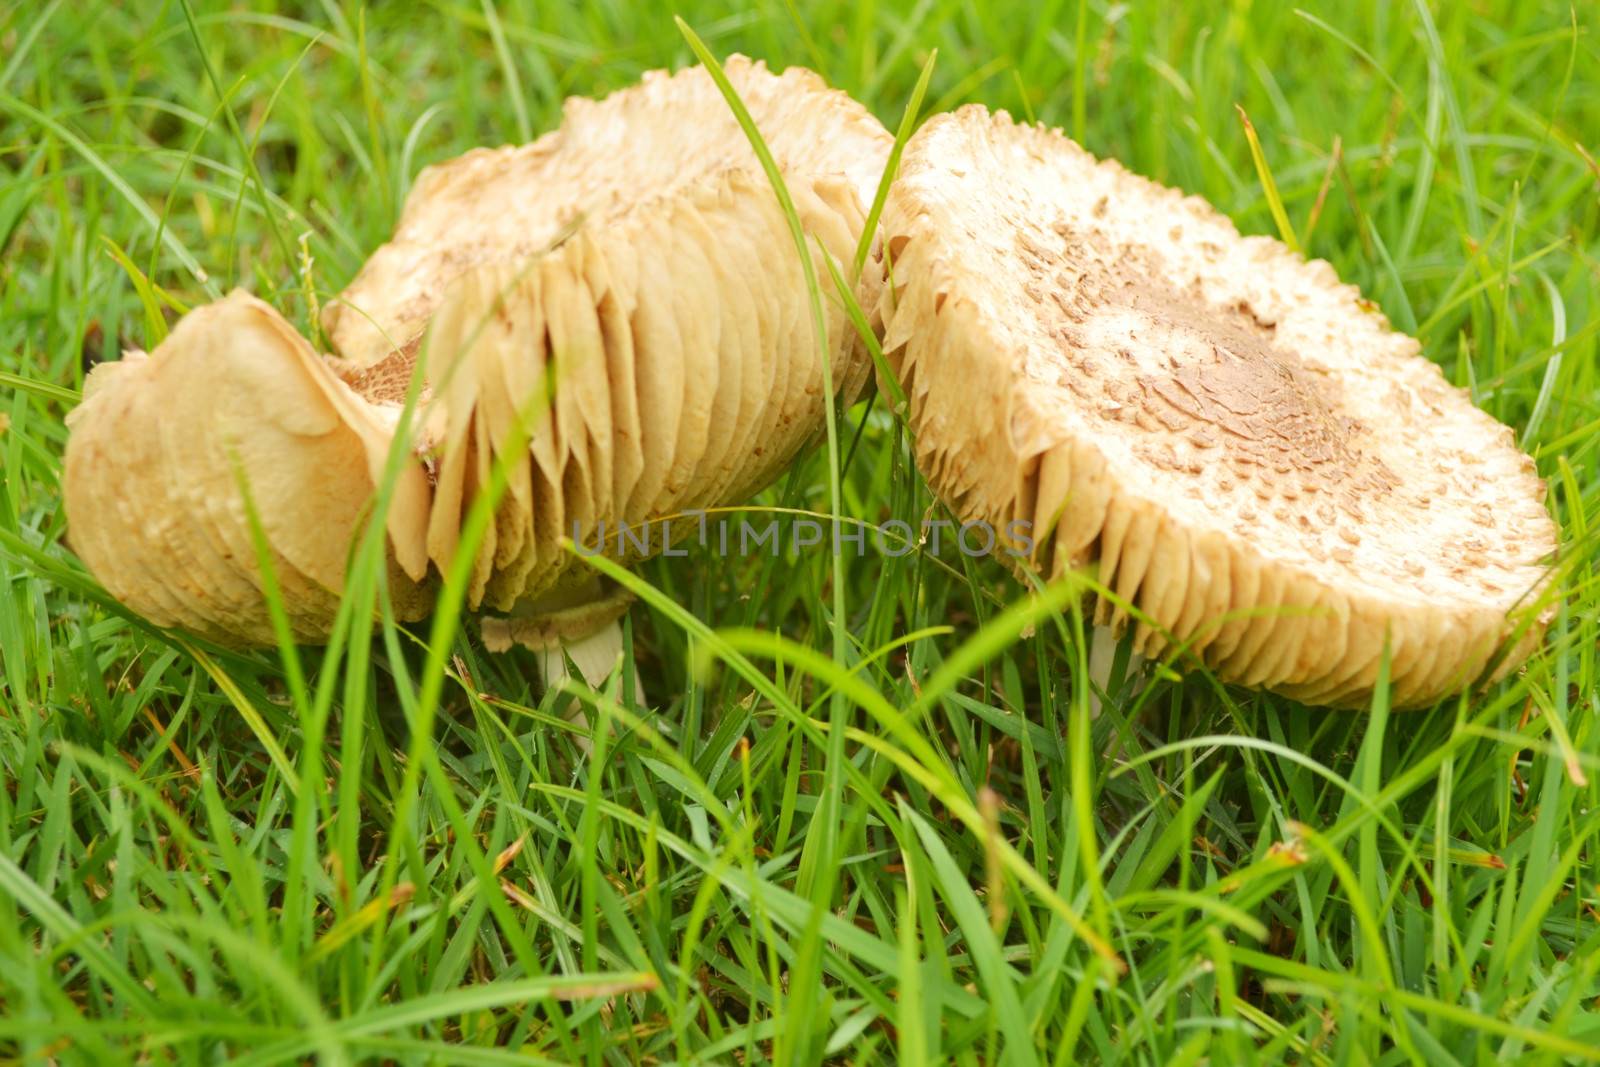 Toxic Mushroom on green grass.